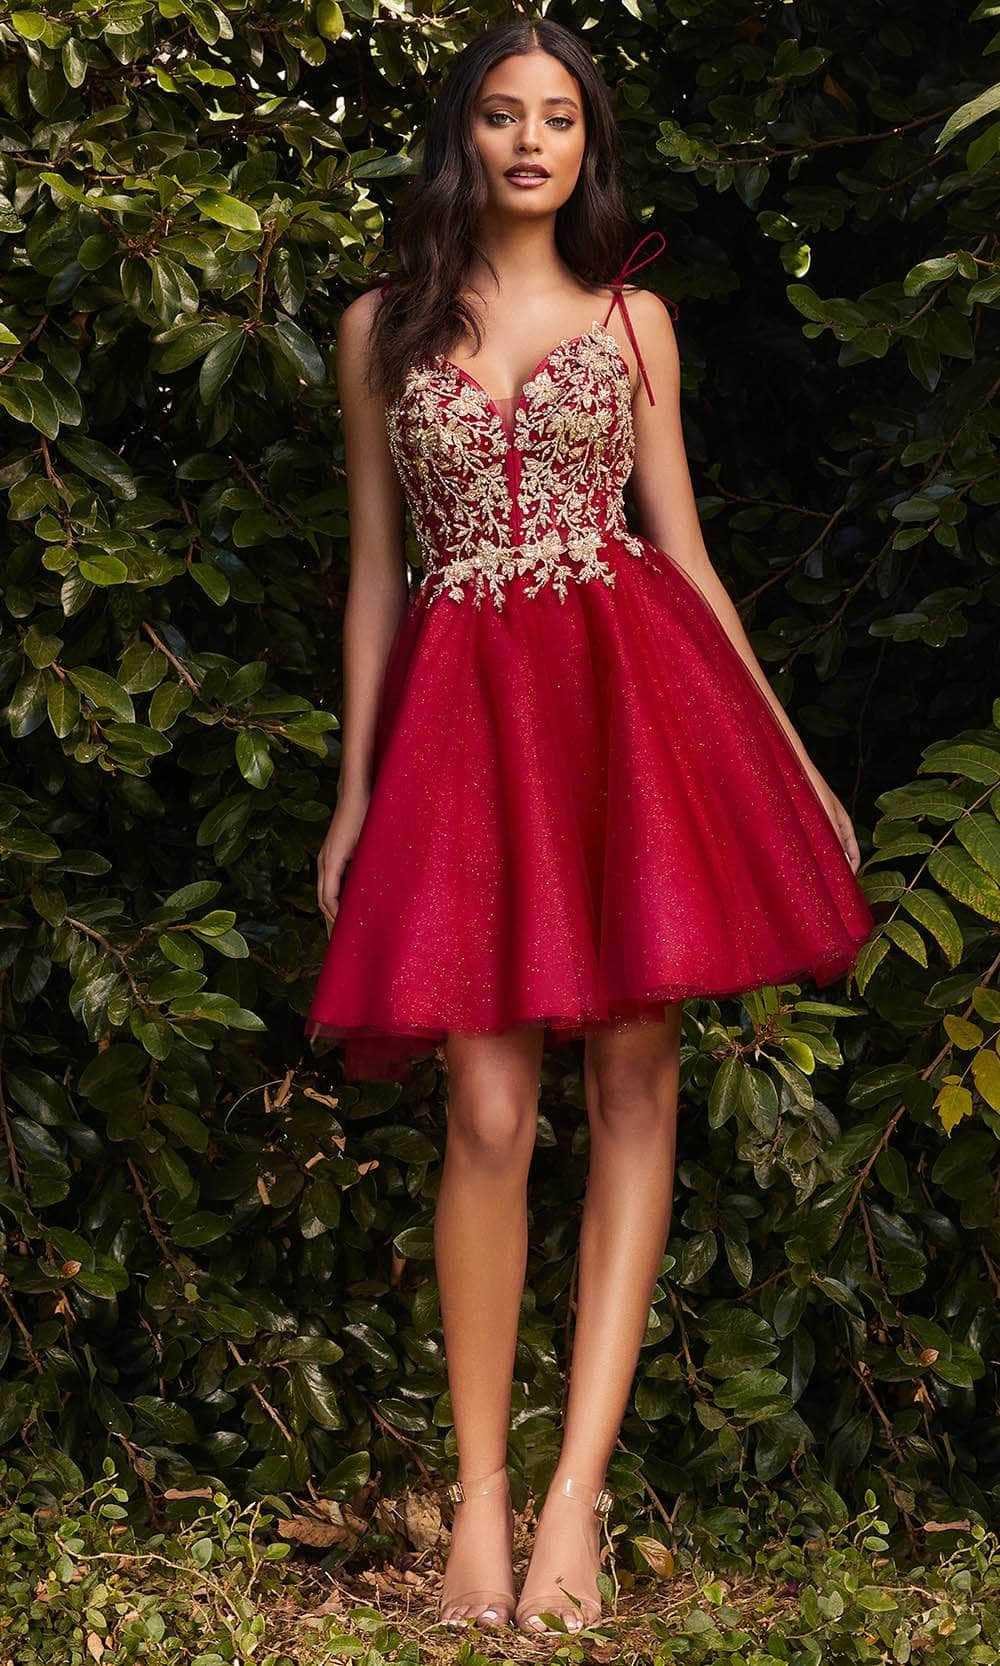 Ladivine, Ladivine CD0188 - Corset Applique Tulle and Lace Prom Dress